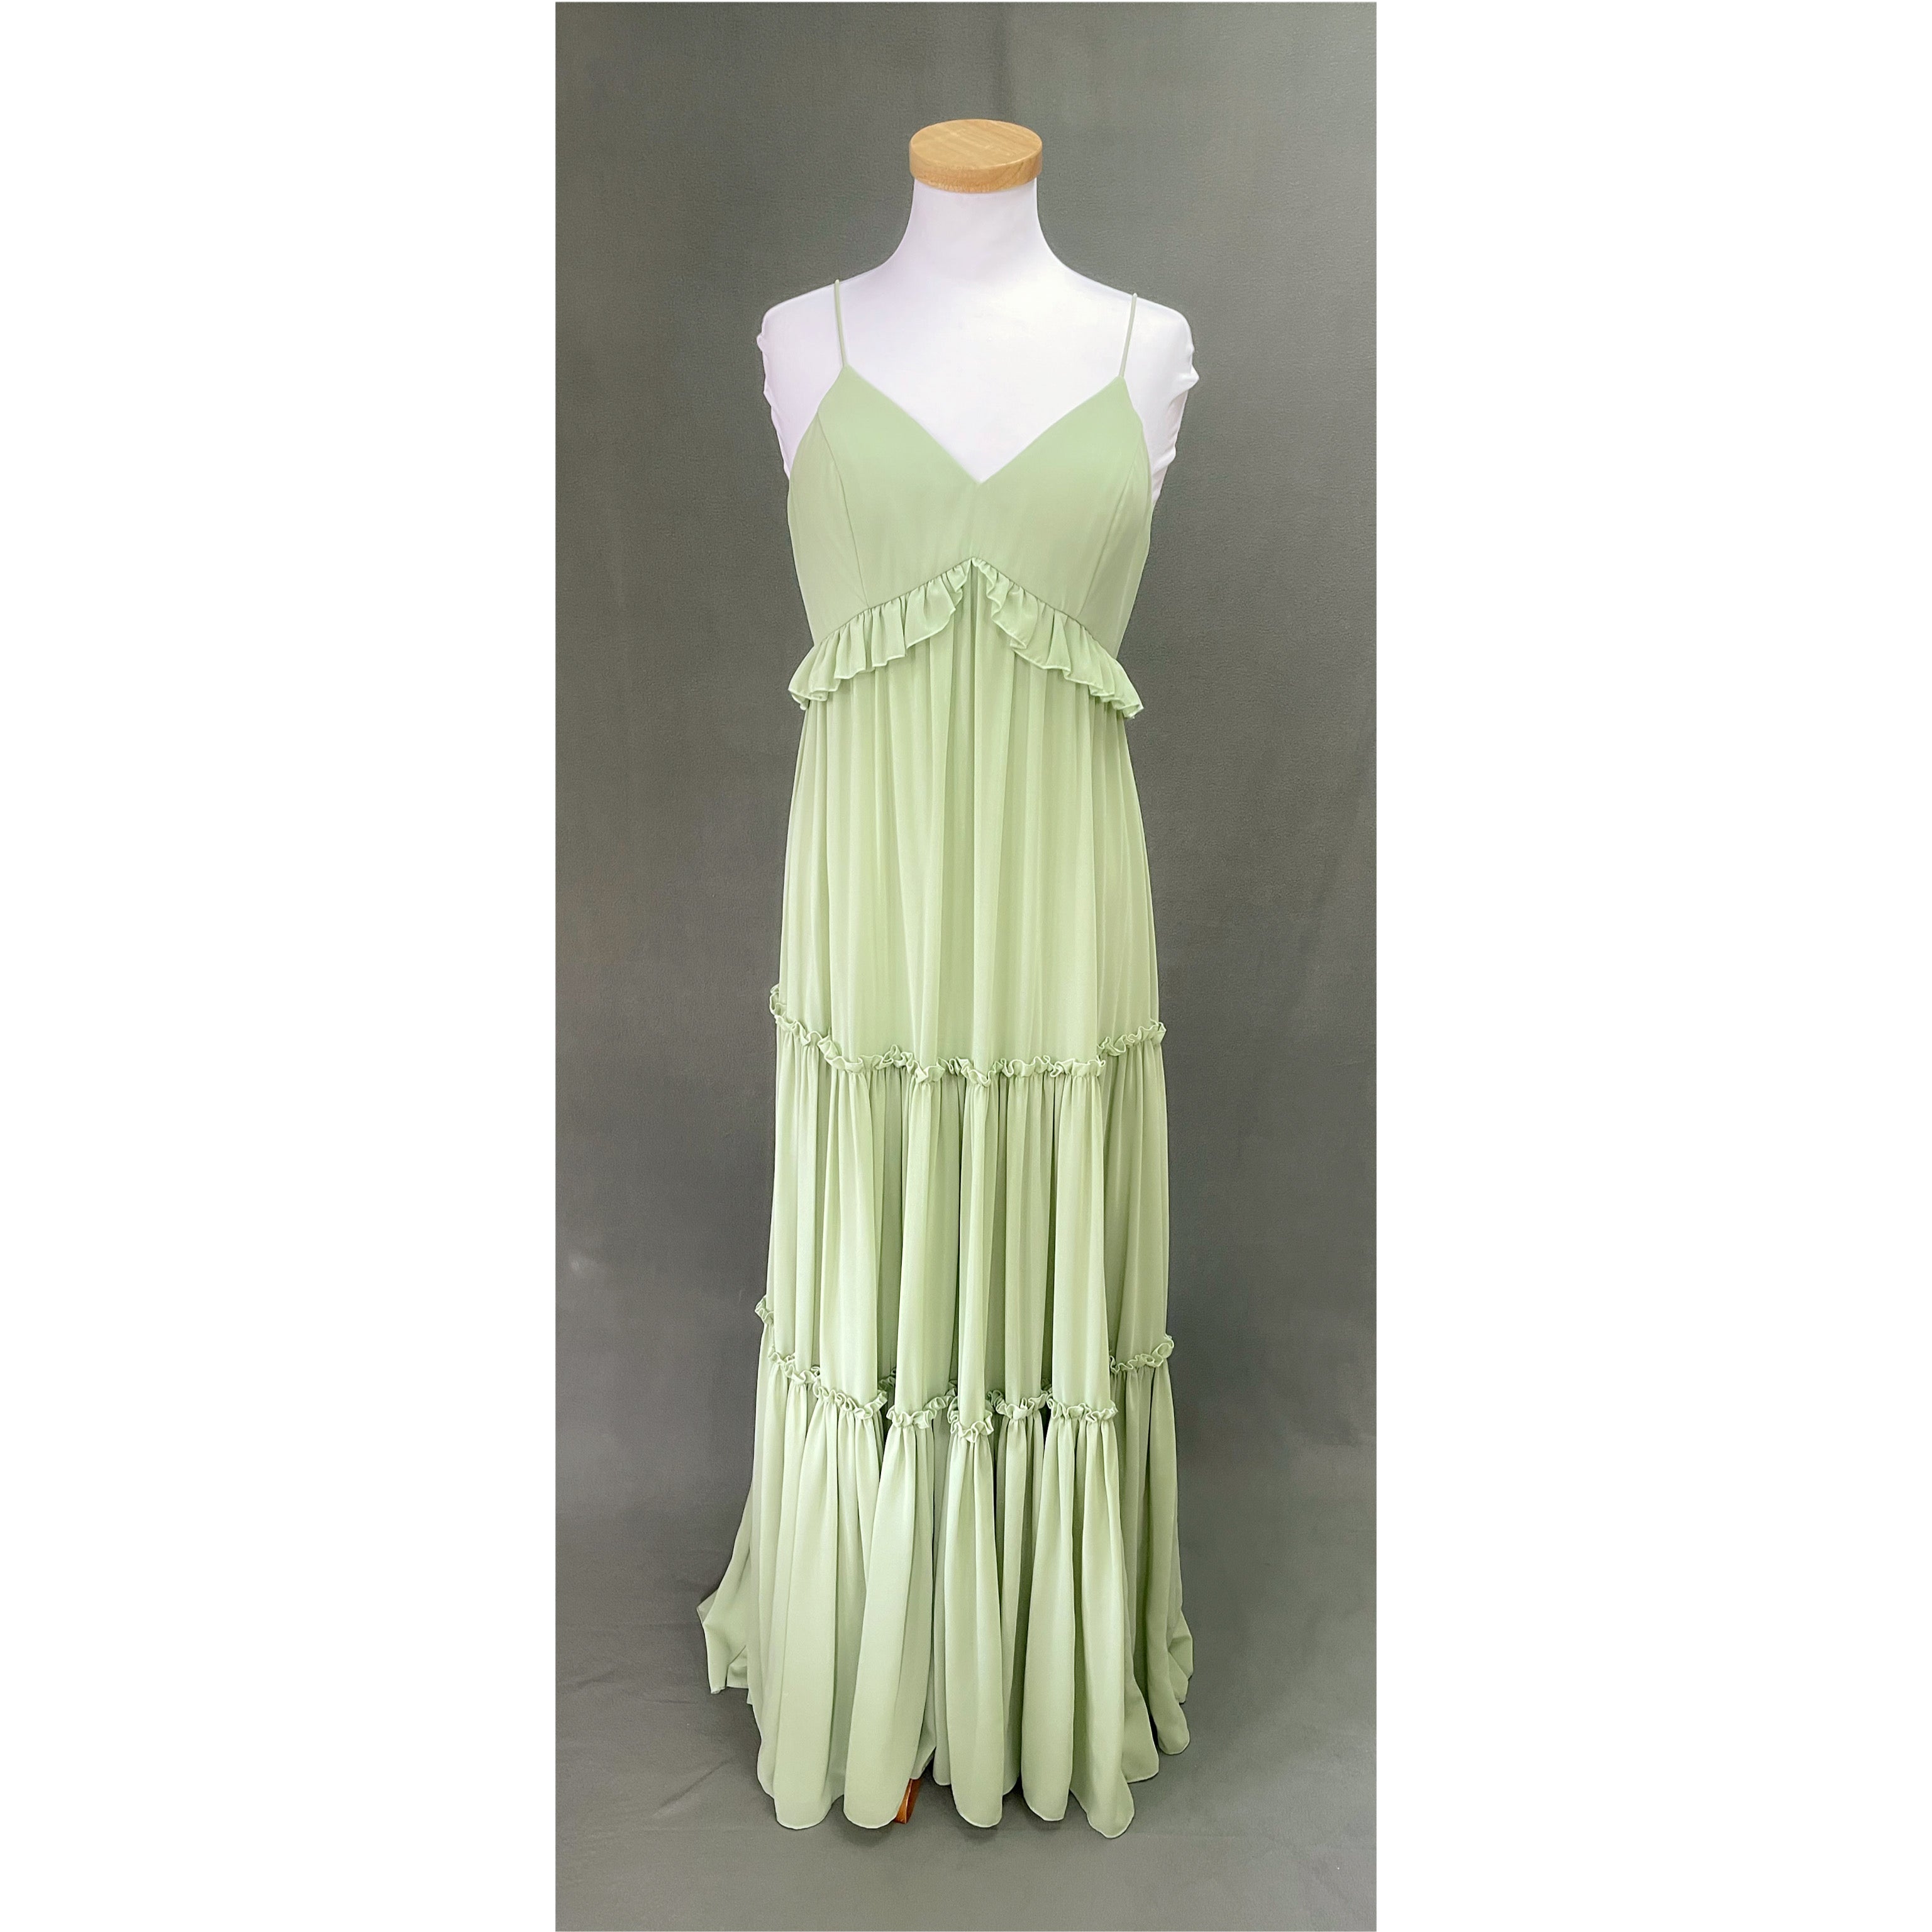 Sage dress, size 8